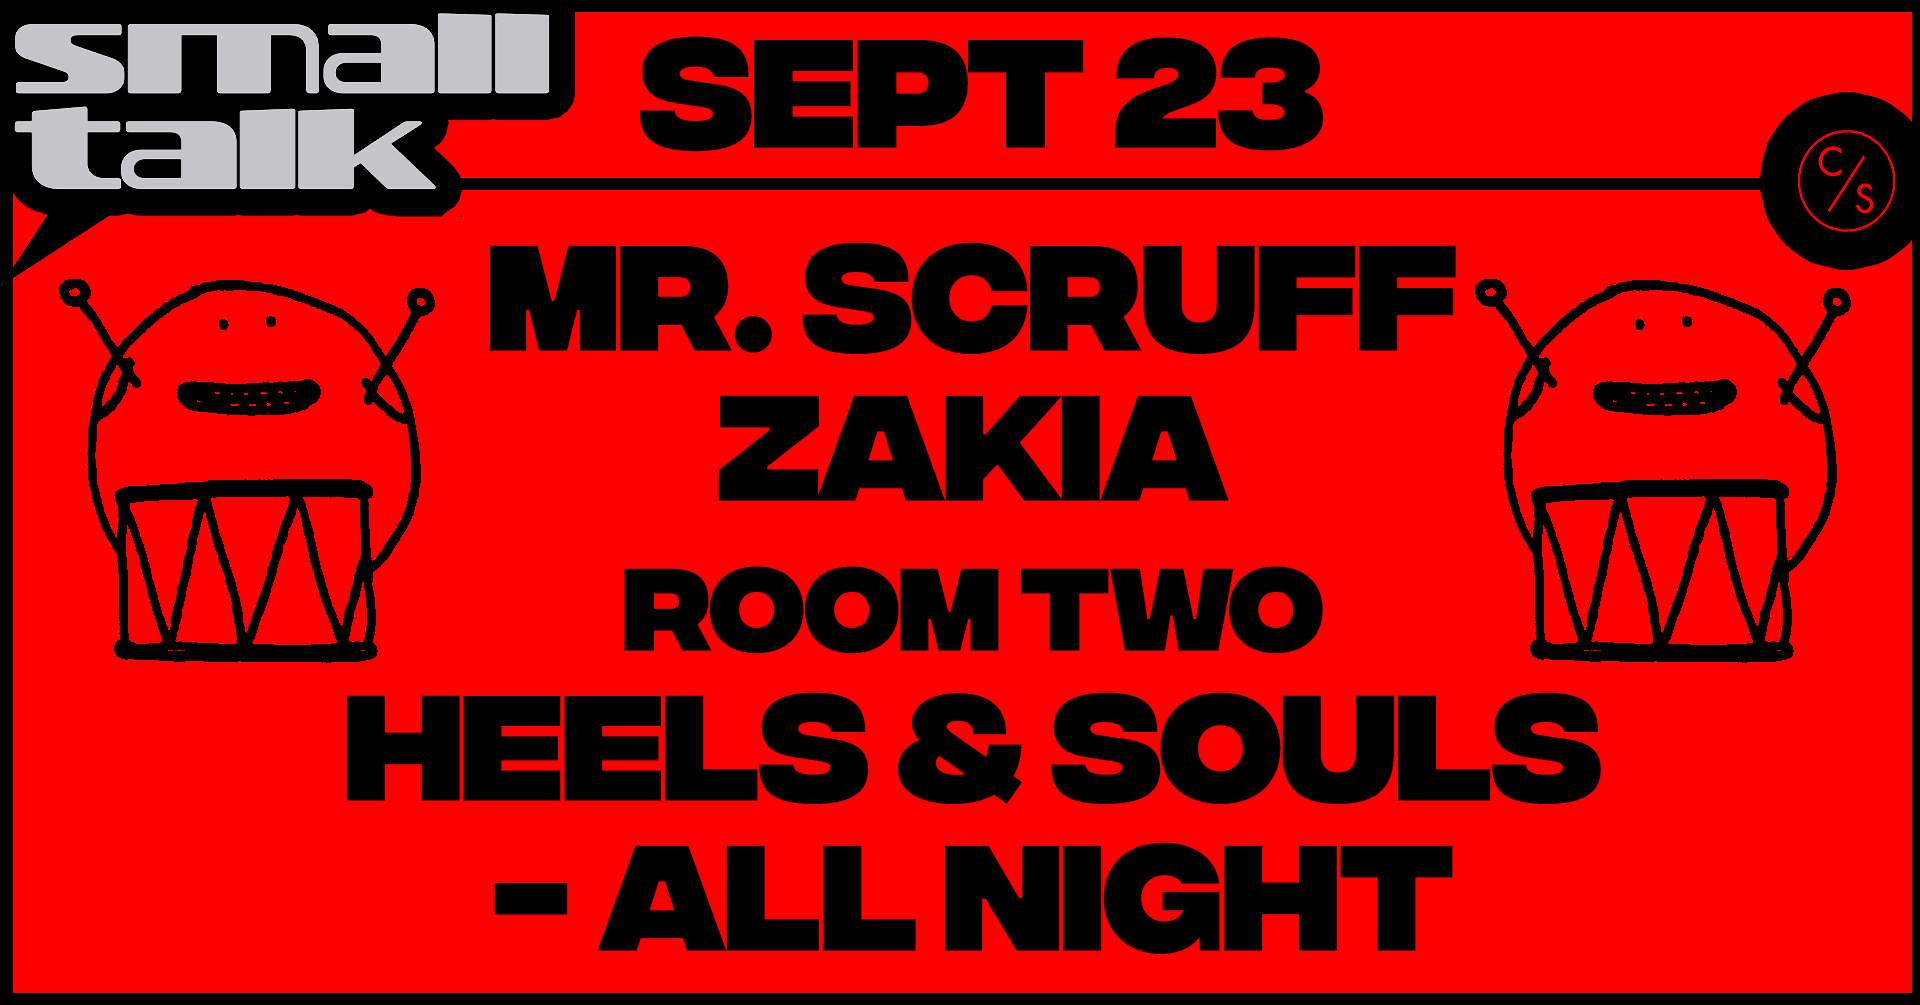 Small Talk with Mr Scruff, Zakia, Heels & Souls - Flyer front